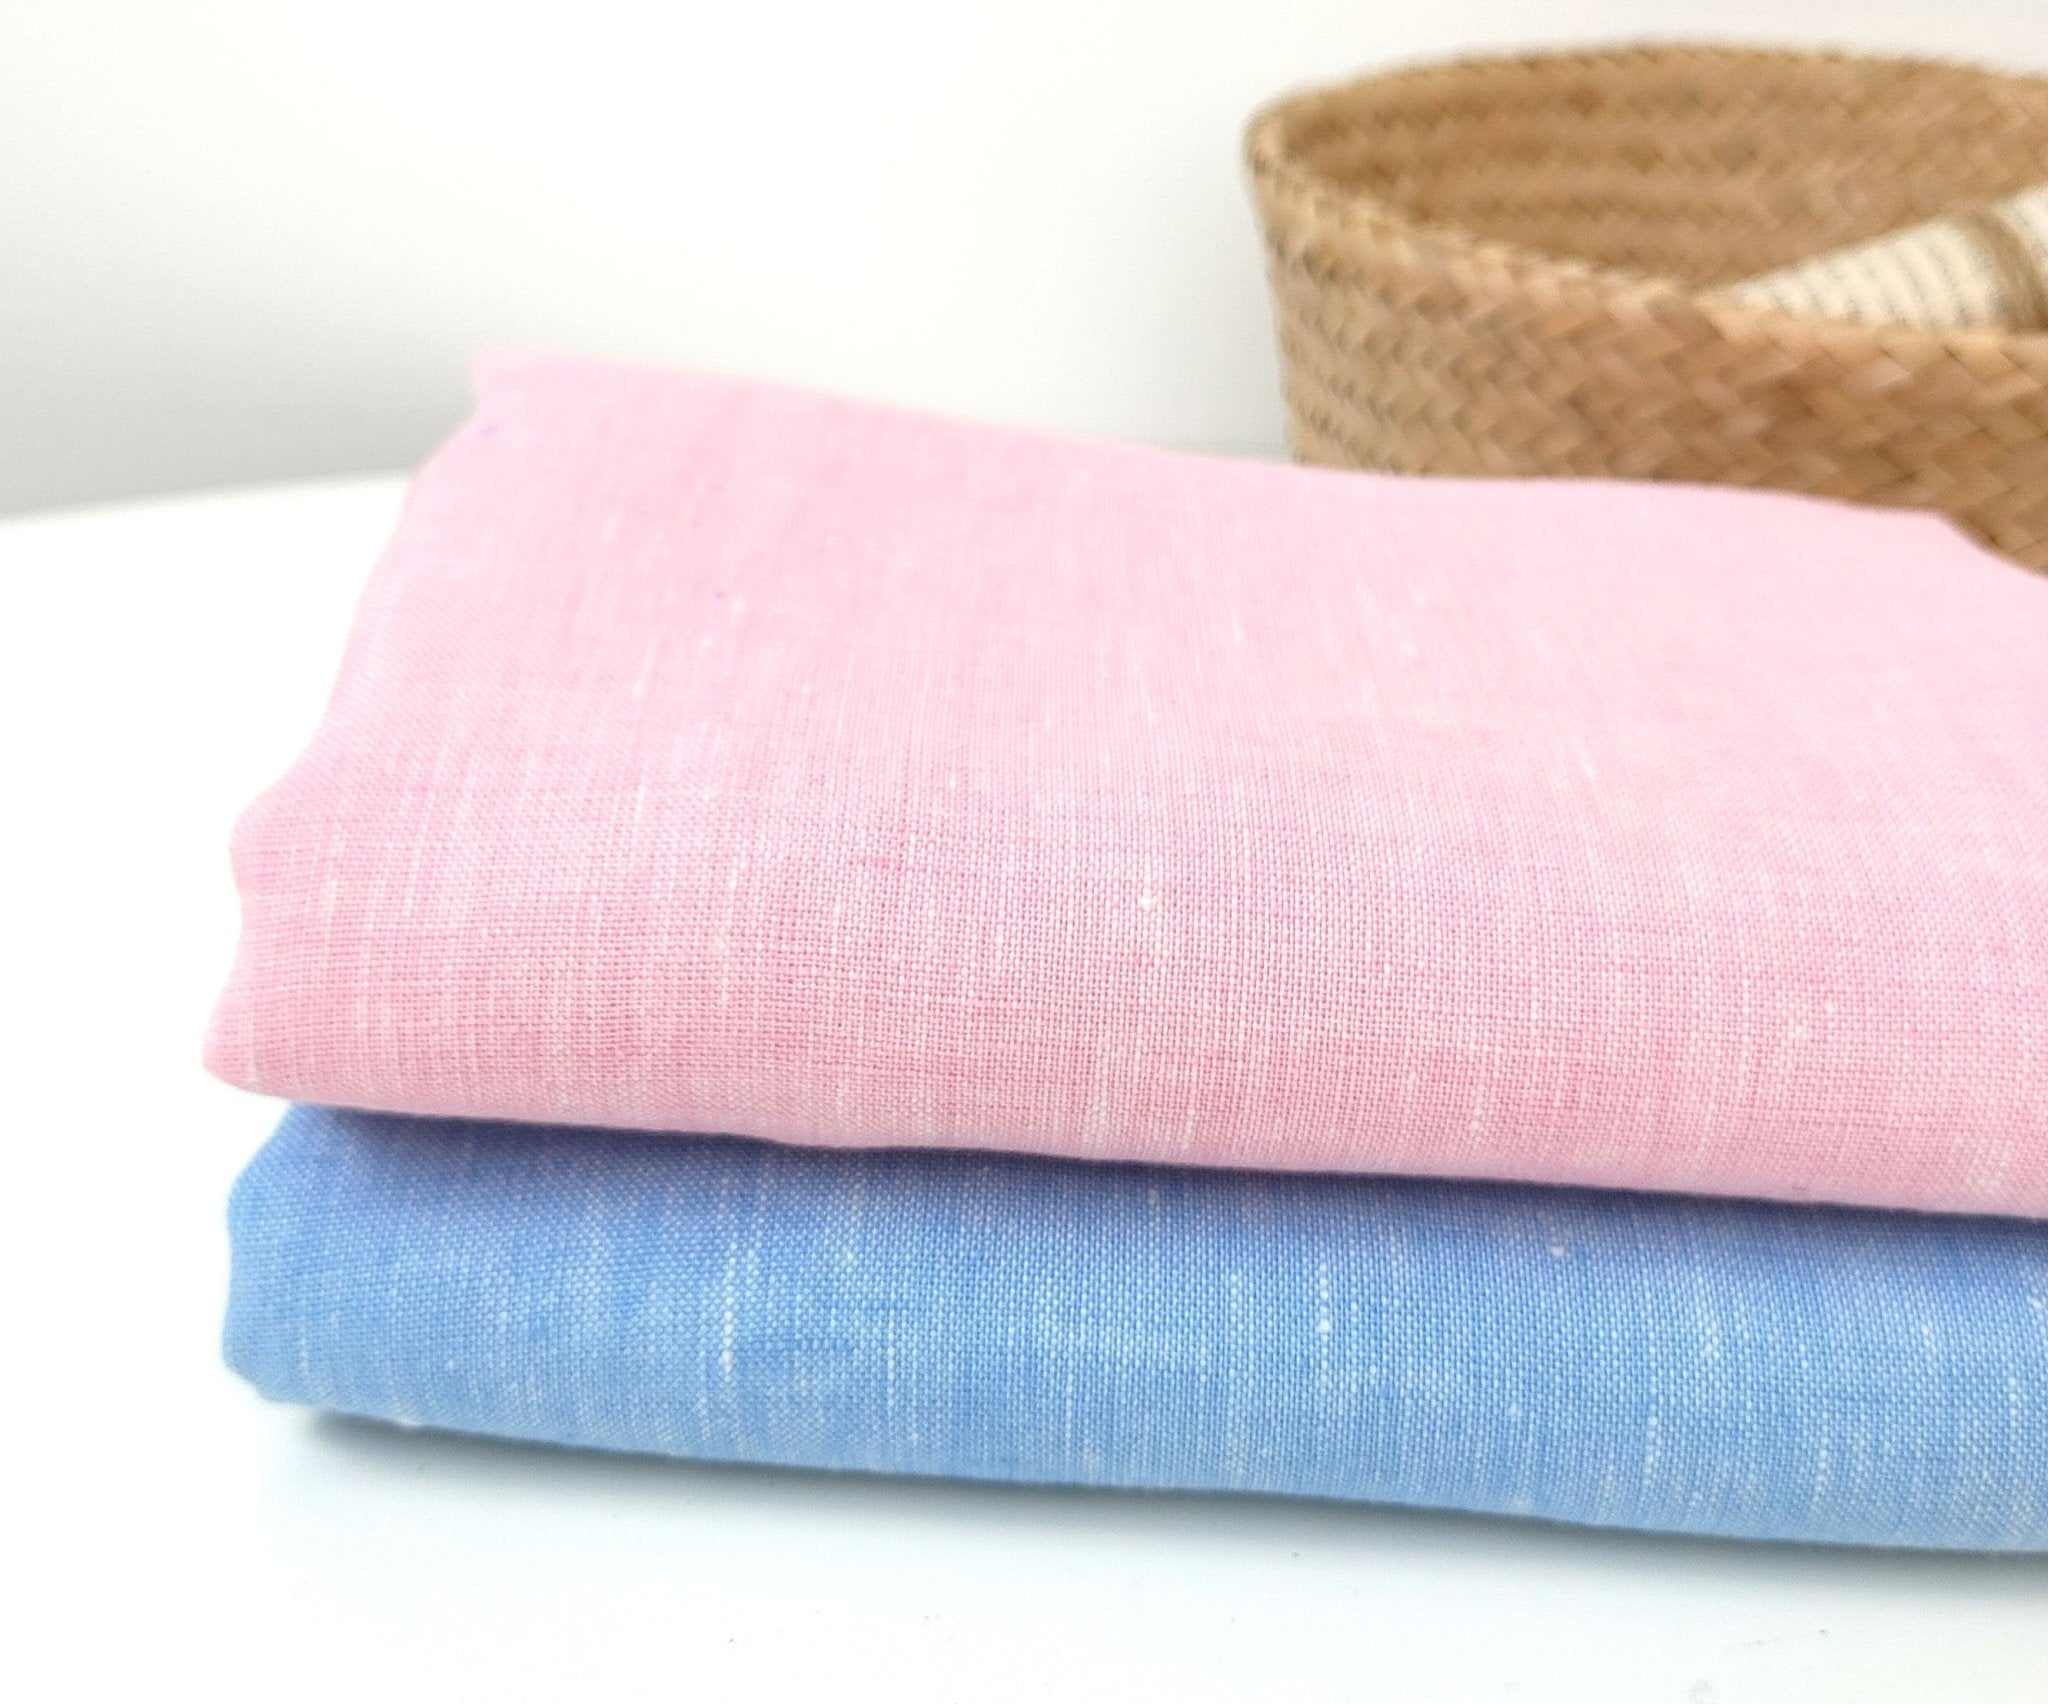 Premium 100% Linen Chambray Fabric - Medium-Light Weight, Plain Weave 7800 7801 - The Linen Lab - Blue